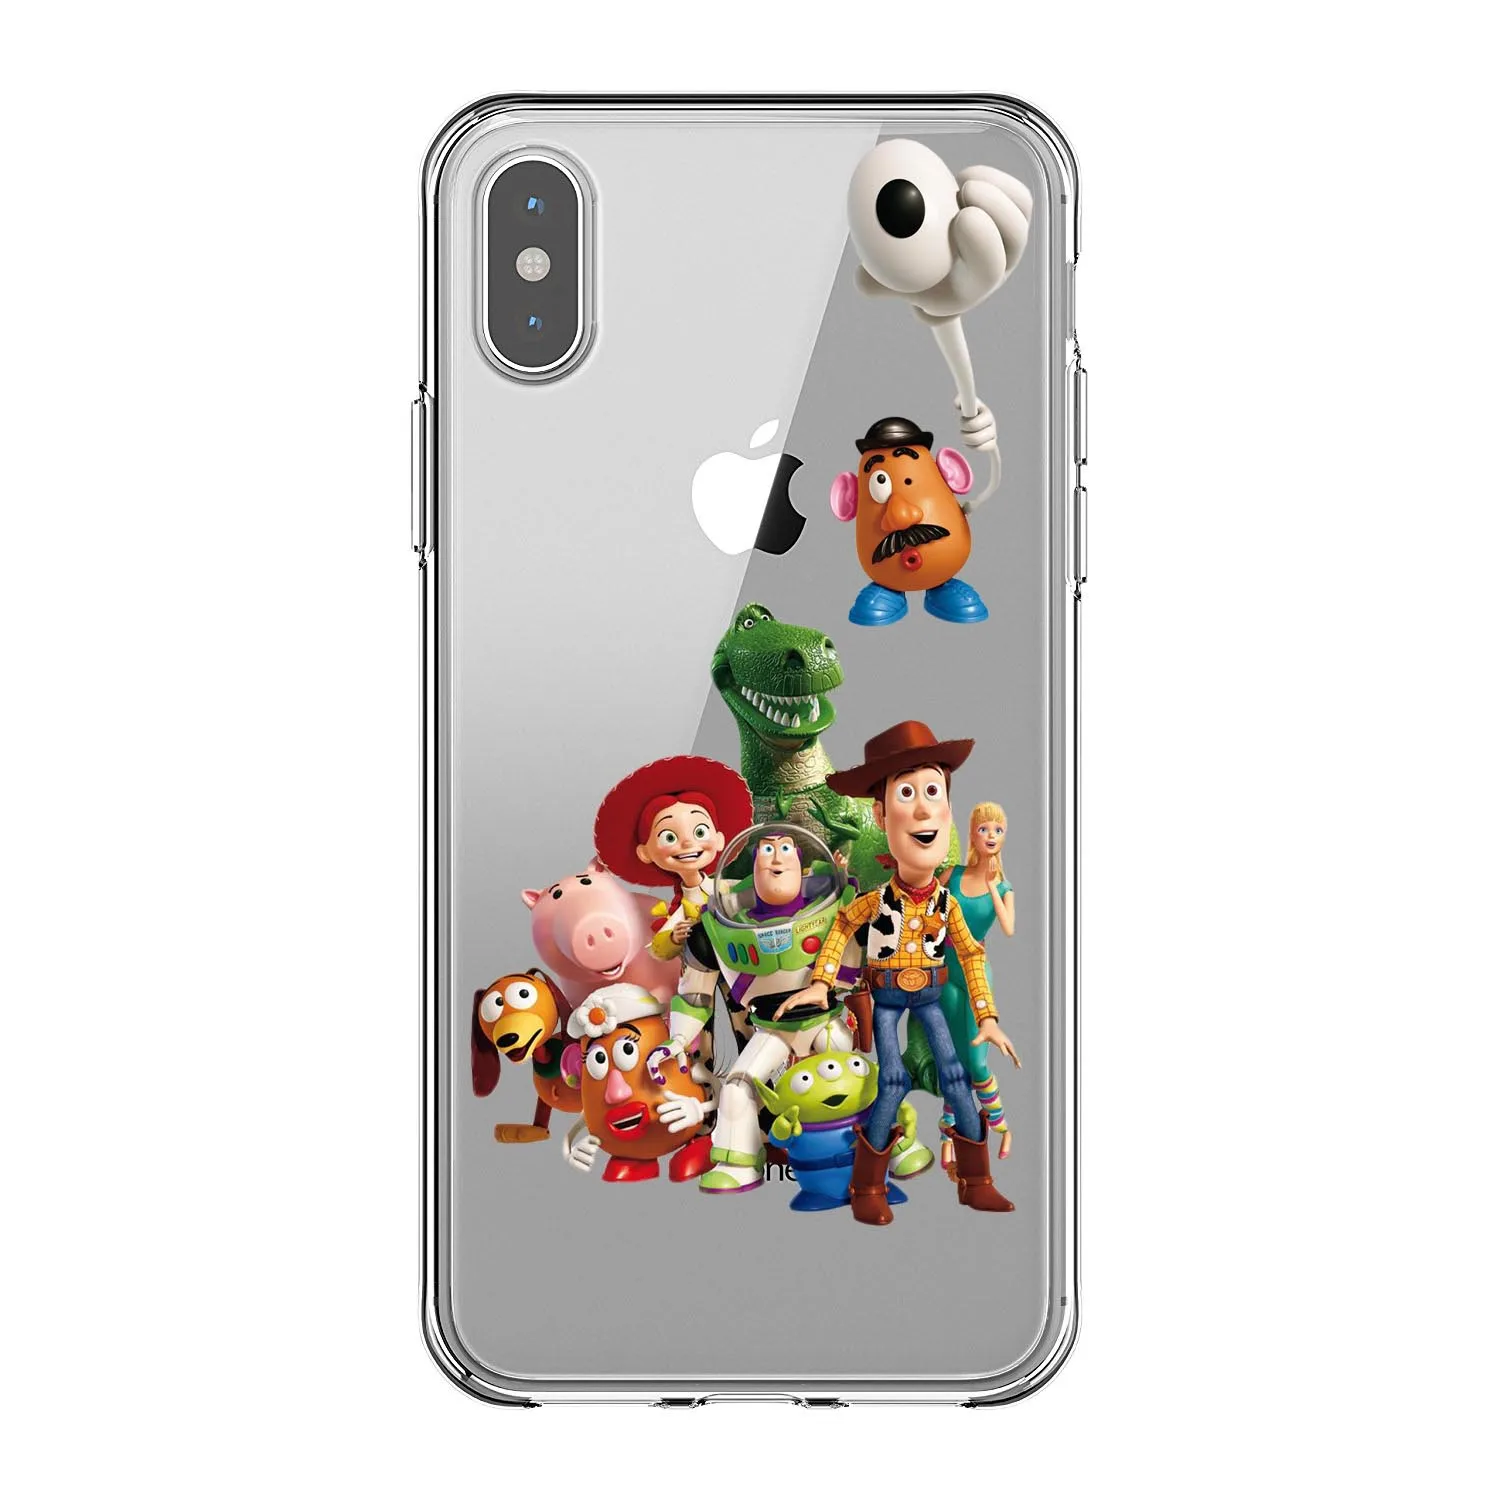 Cowboy Woody Buzz Lightyear Toy Story Мягкие силиконовые чехлы для телефонов из ТПУ для iPhone X 5 5S SE 6 6S Plus 7 8 Plus XS XR XS MAX - Цвет: TPU